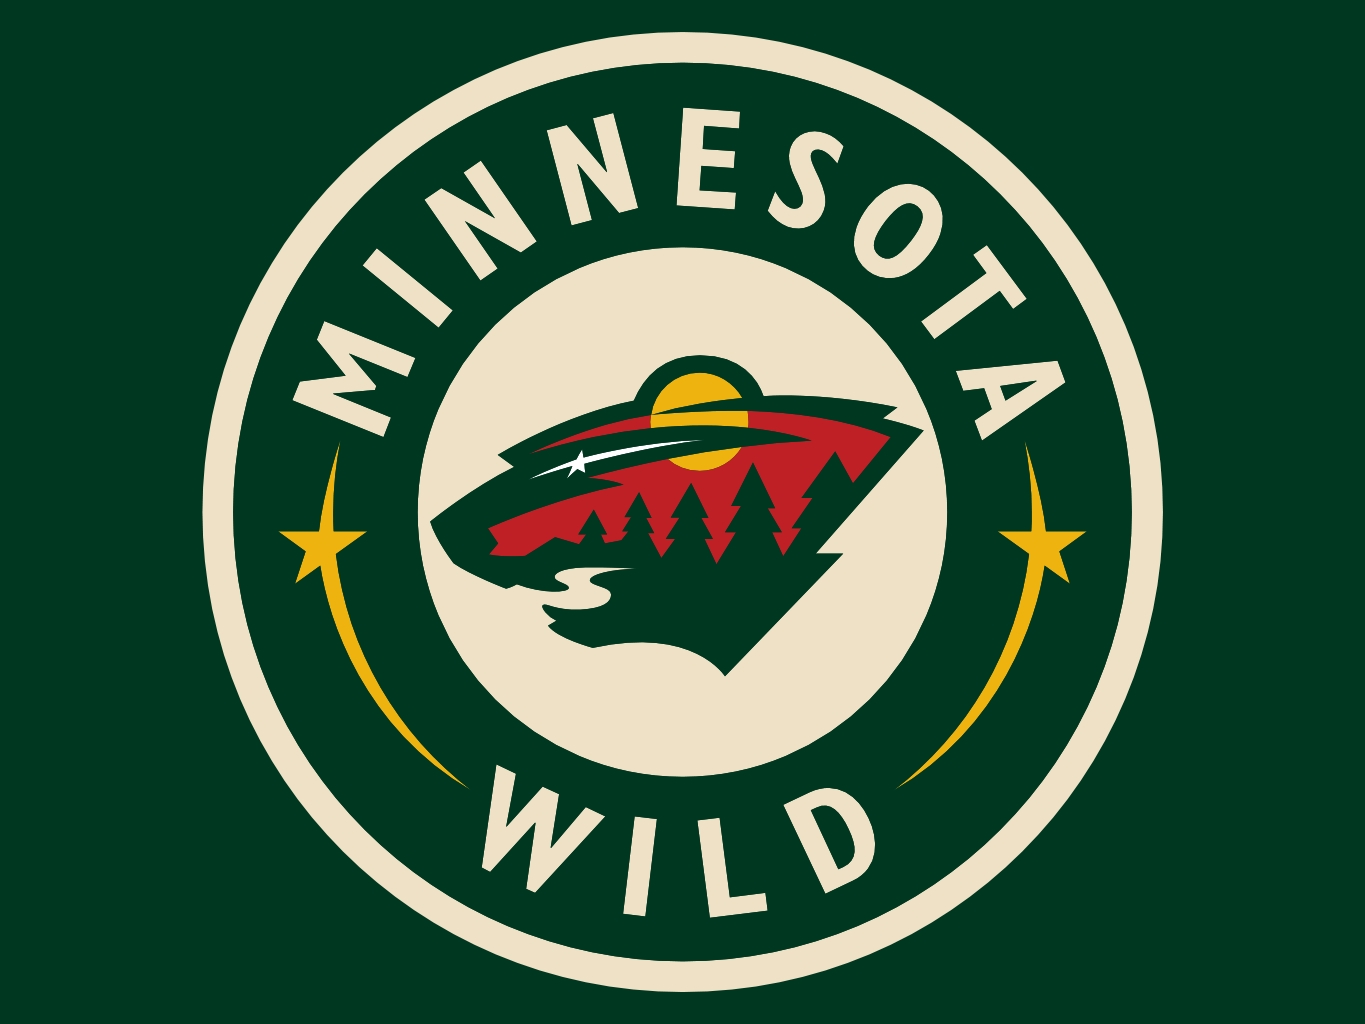 Minnesota Wild Tickets